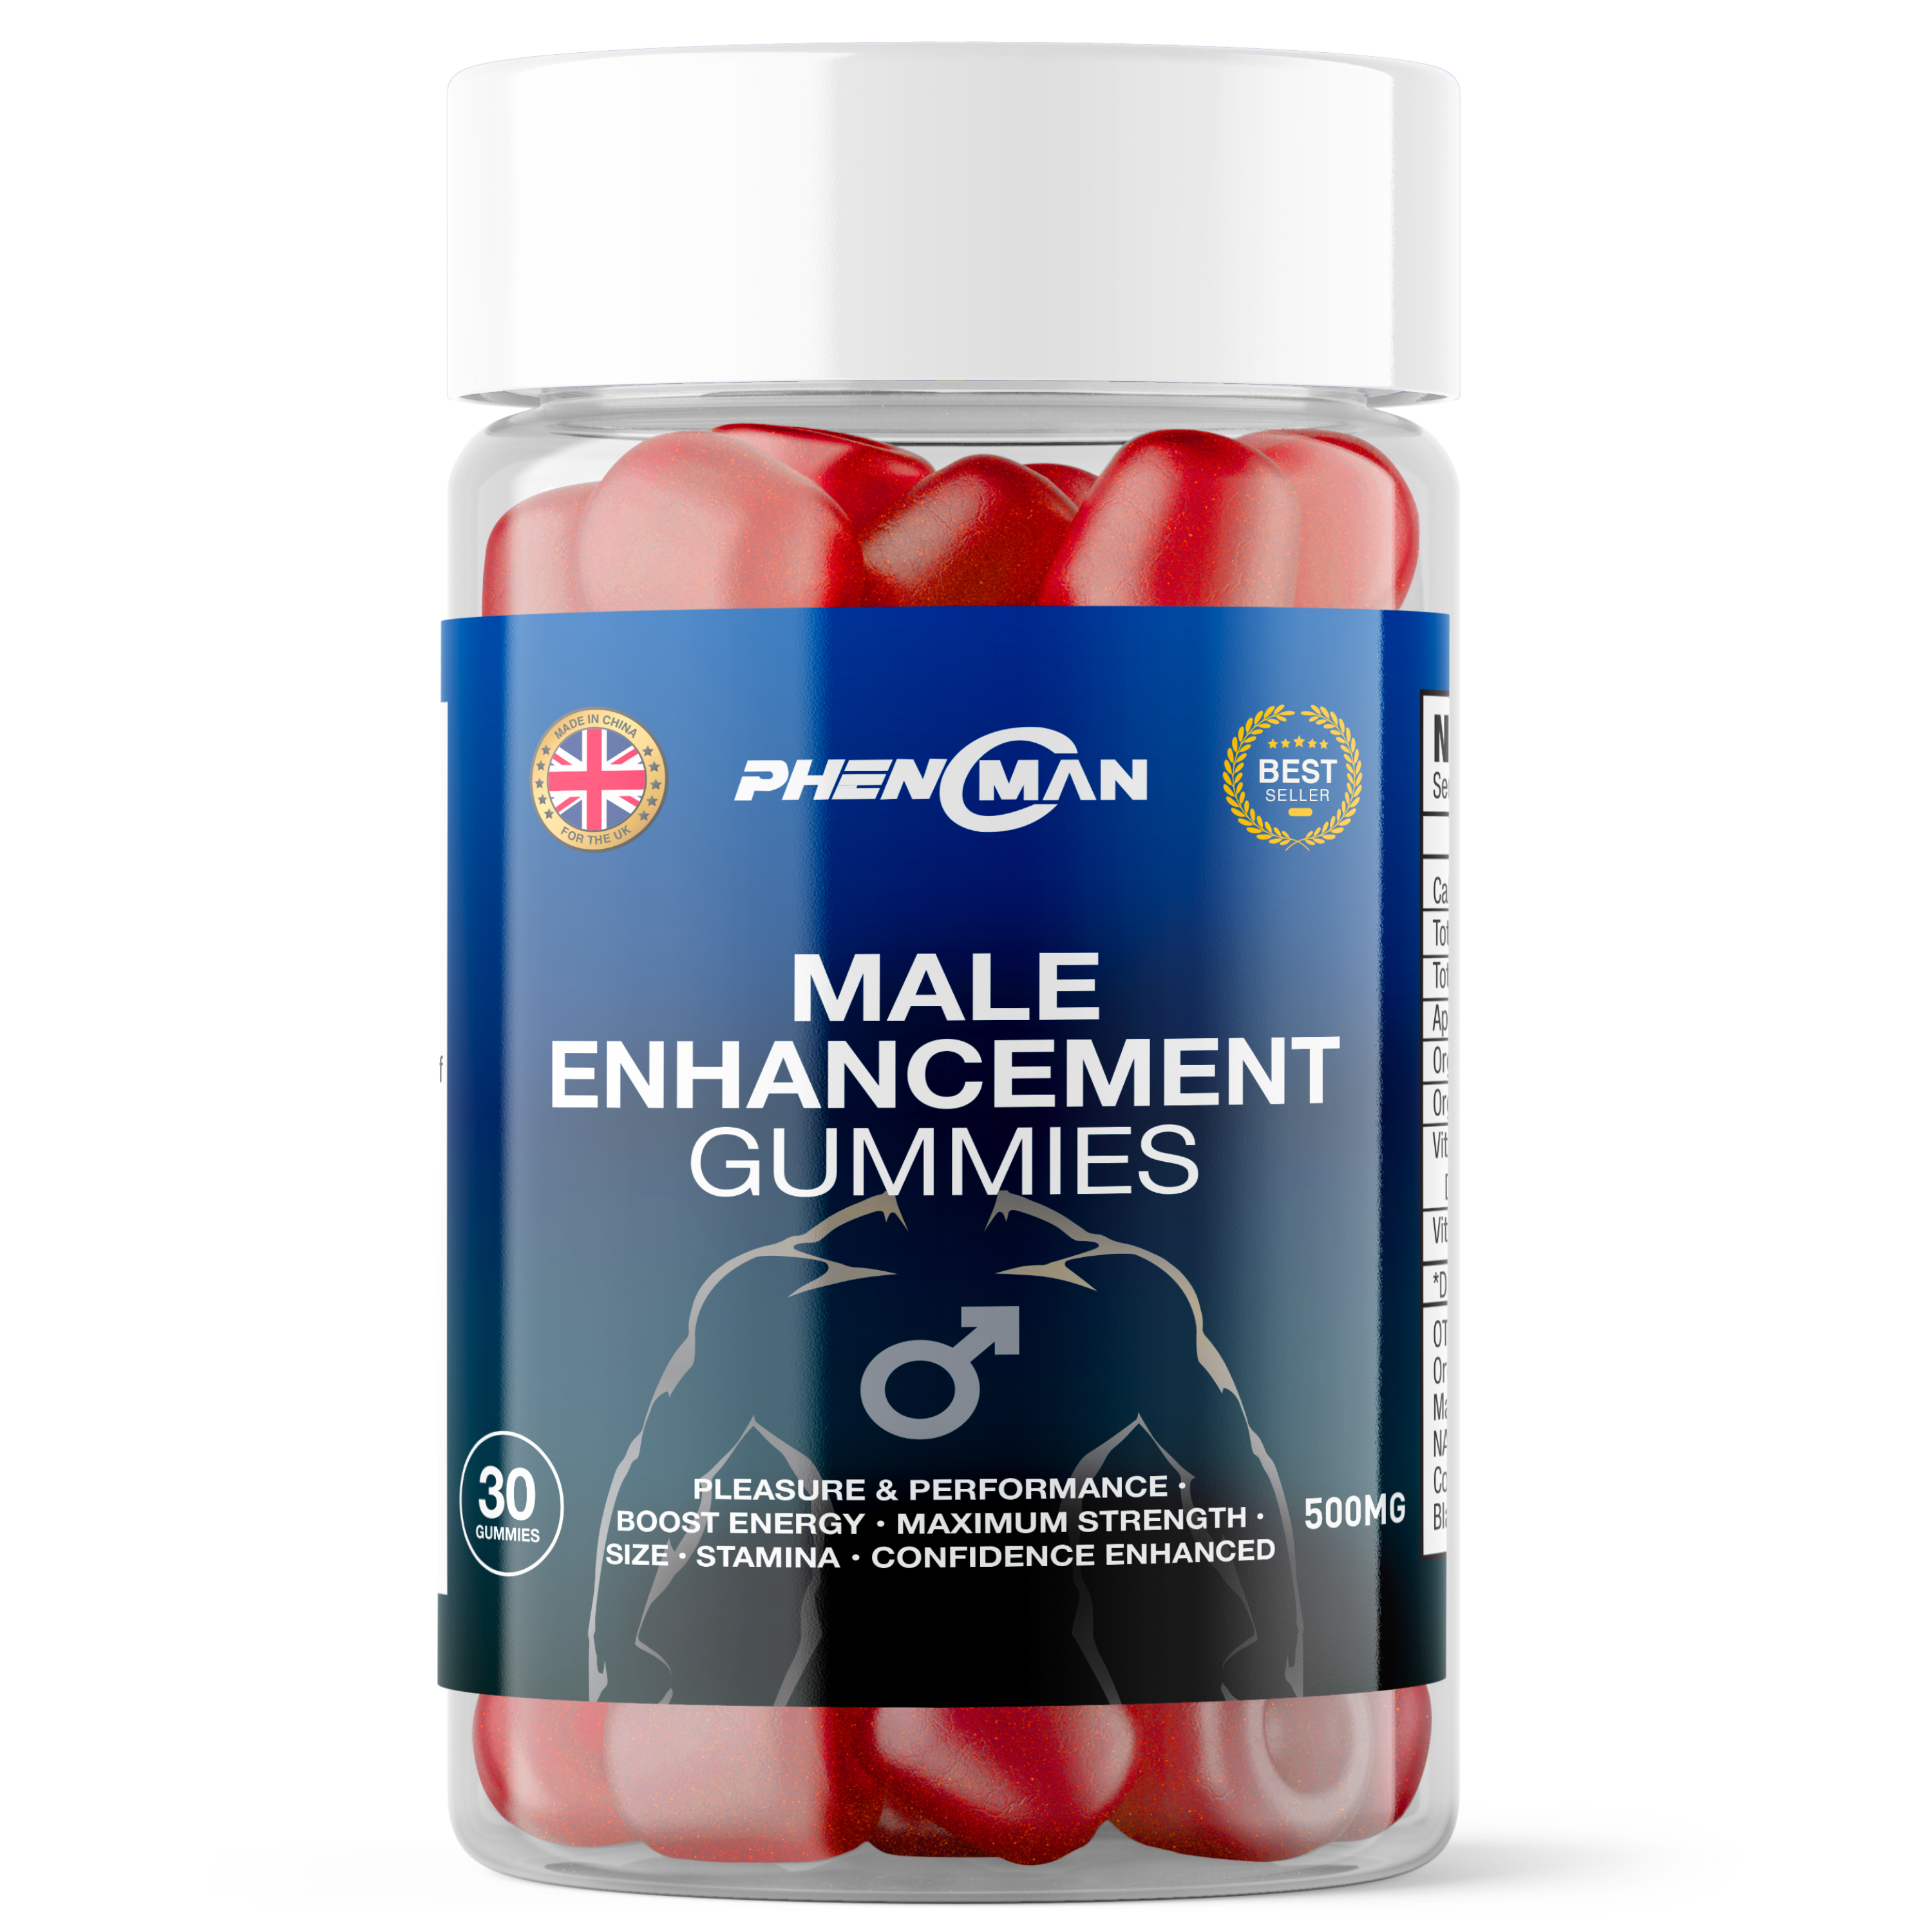 Phenoman Male Enhancement 30 Gummies